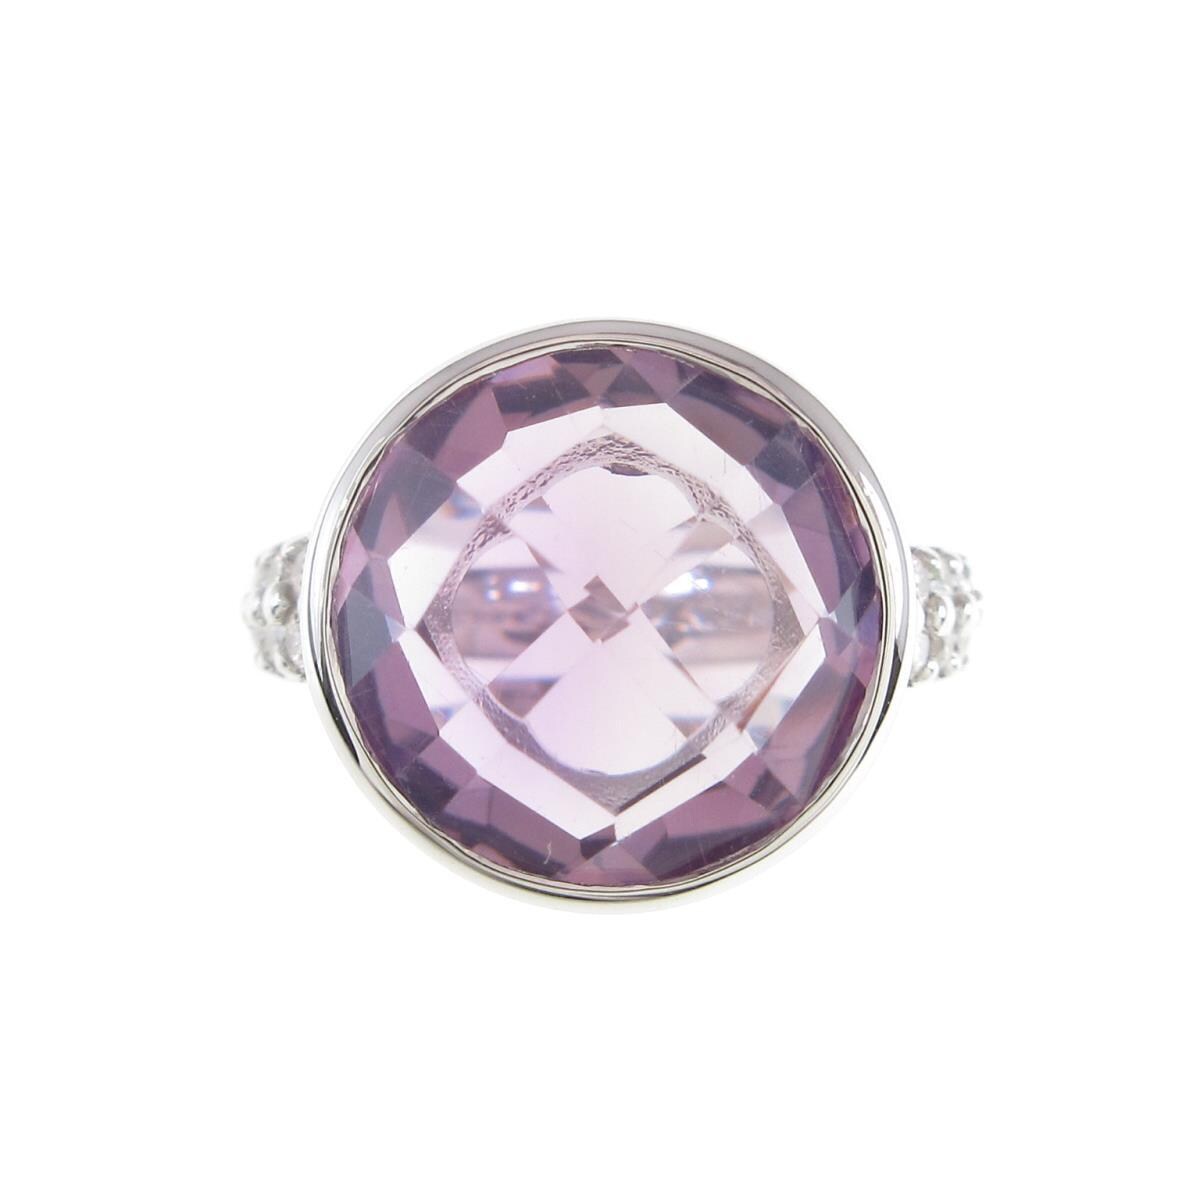 KOMEHYO |K18WG紫水晶串|珠宝|戒指|【官方】日本最大的再利用百货公司